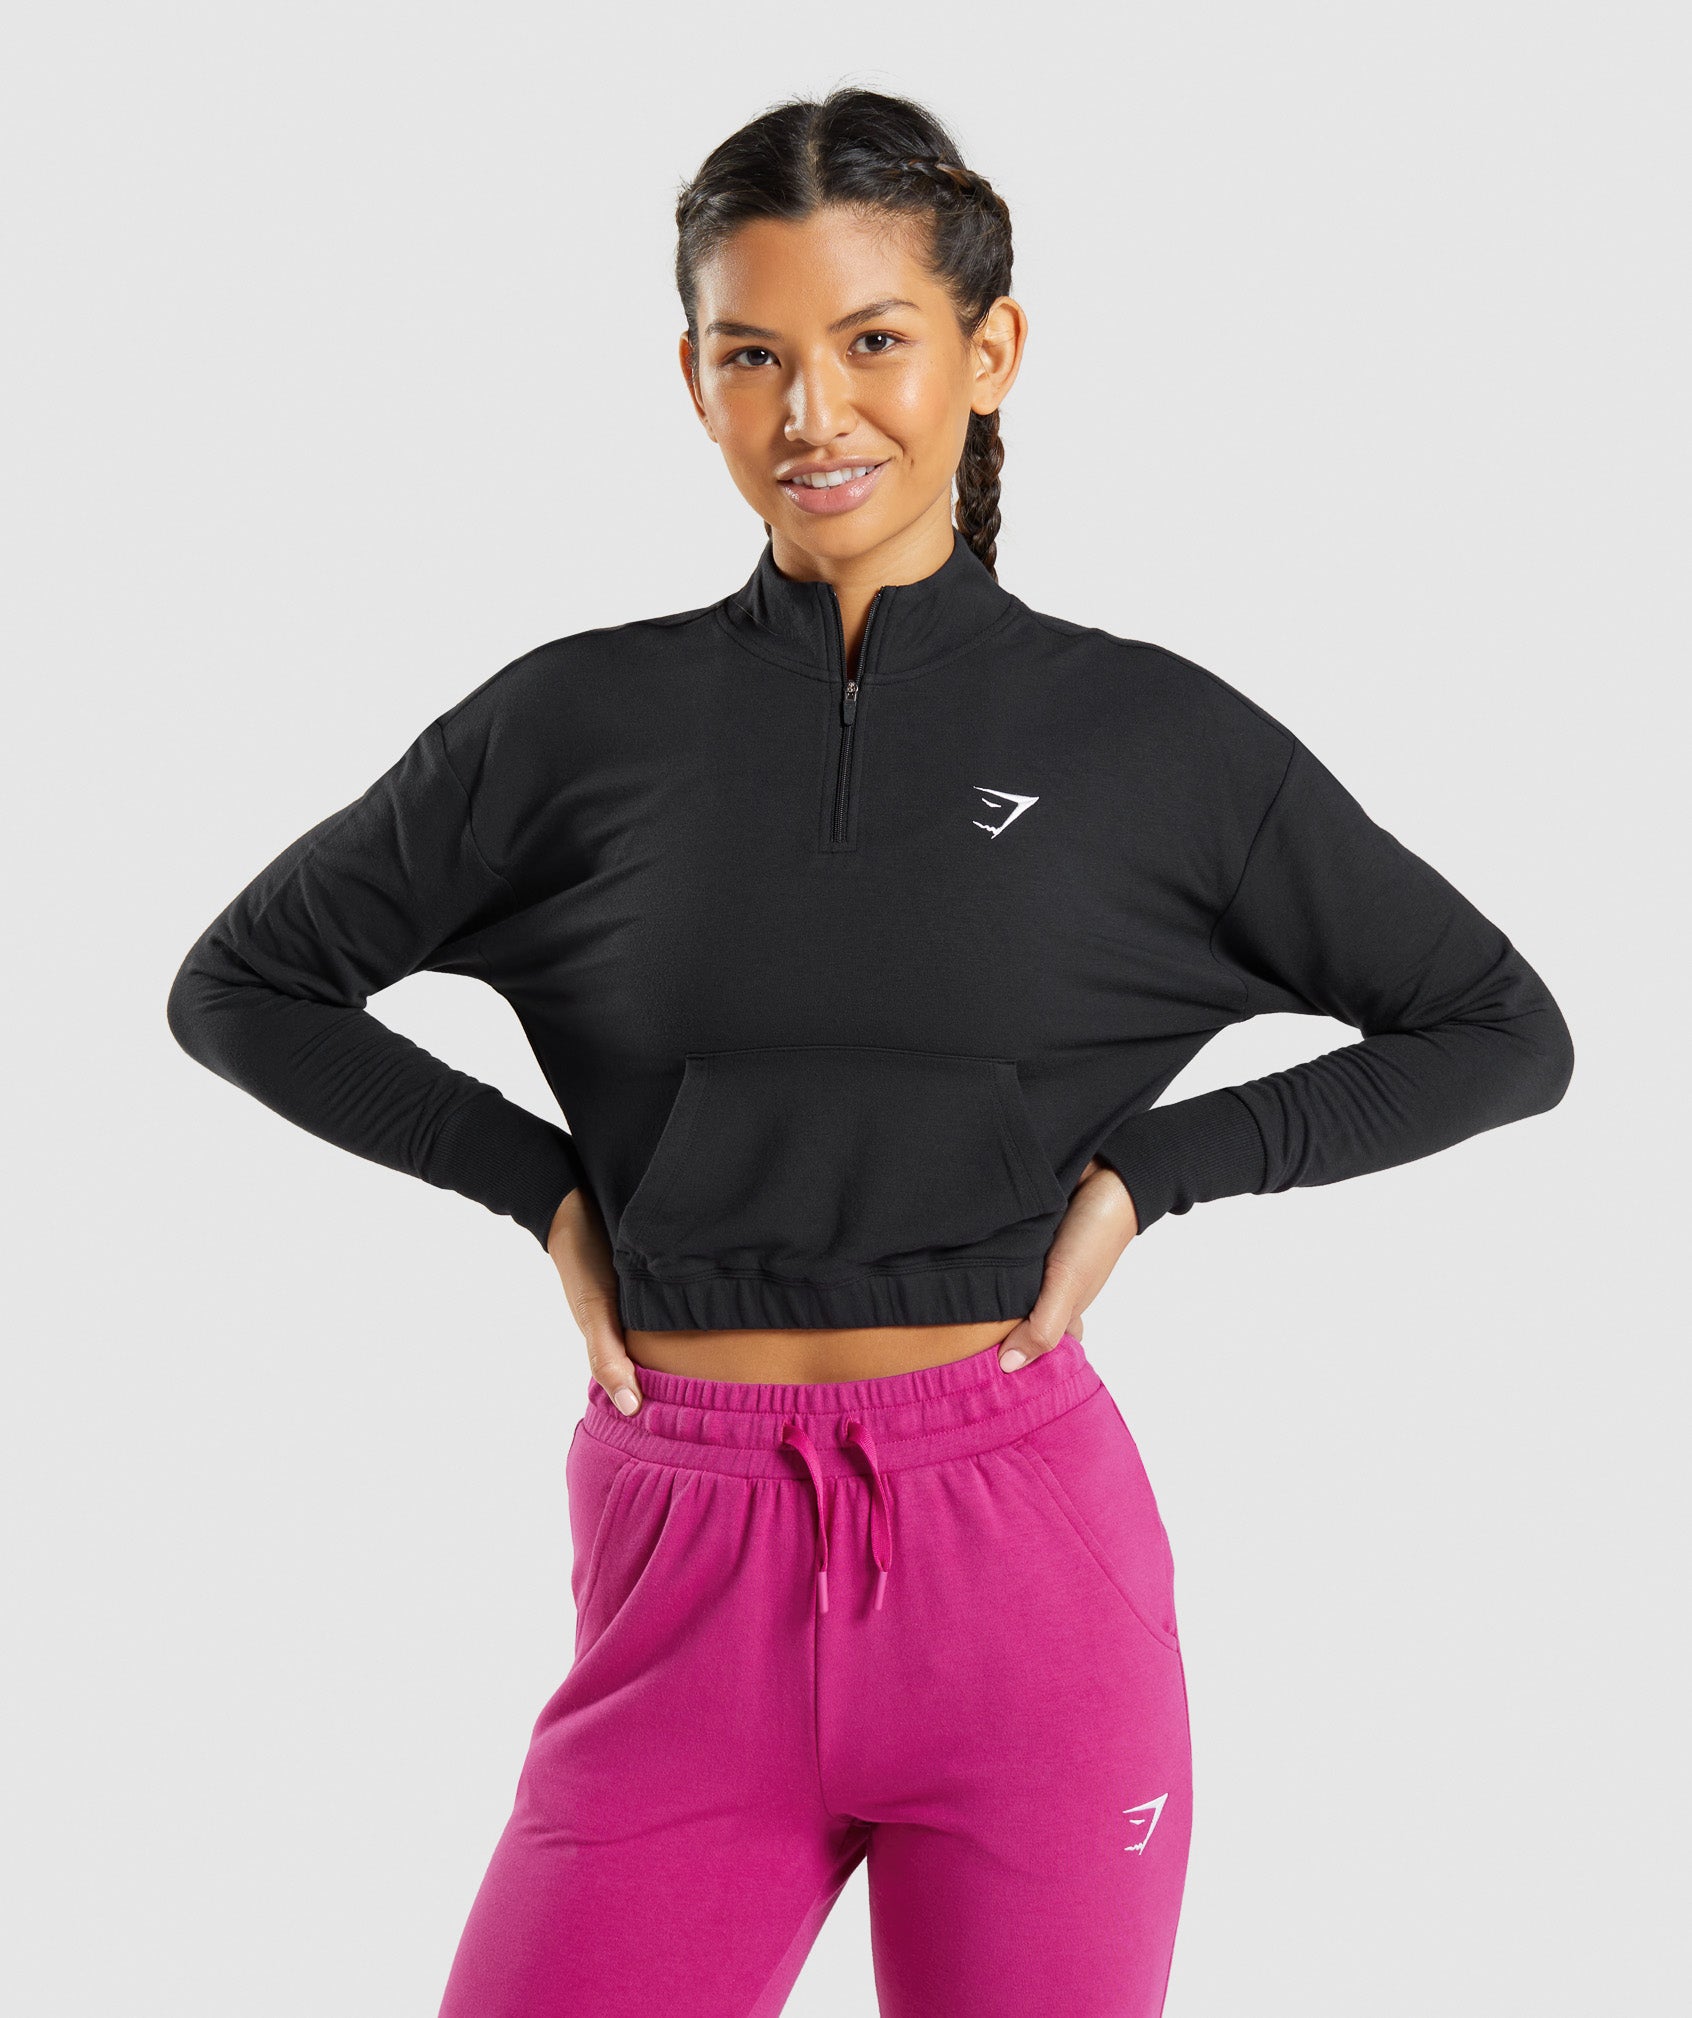 Gymshark Womens S Pippa Training Joggers Sweatpants Light Pink